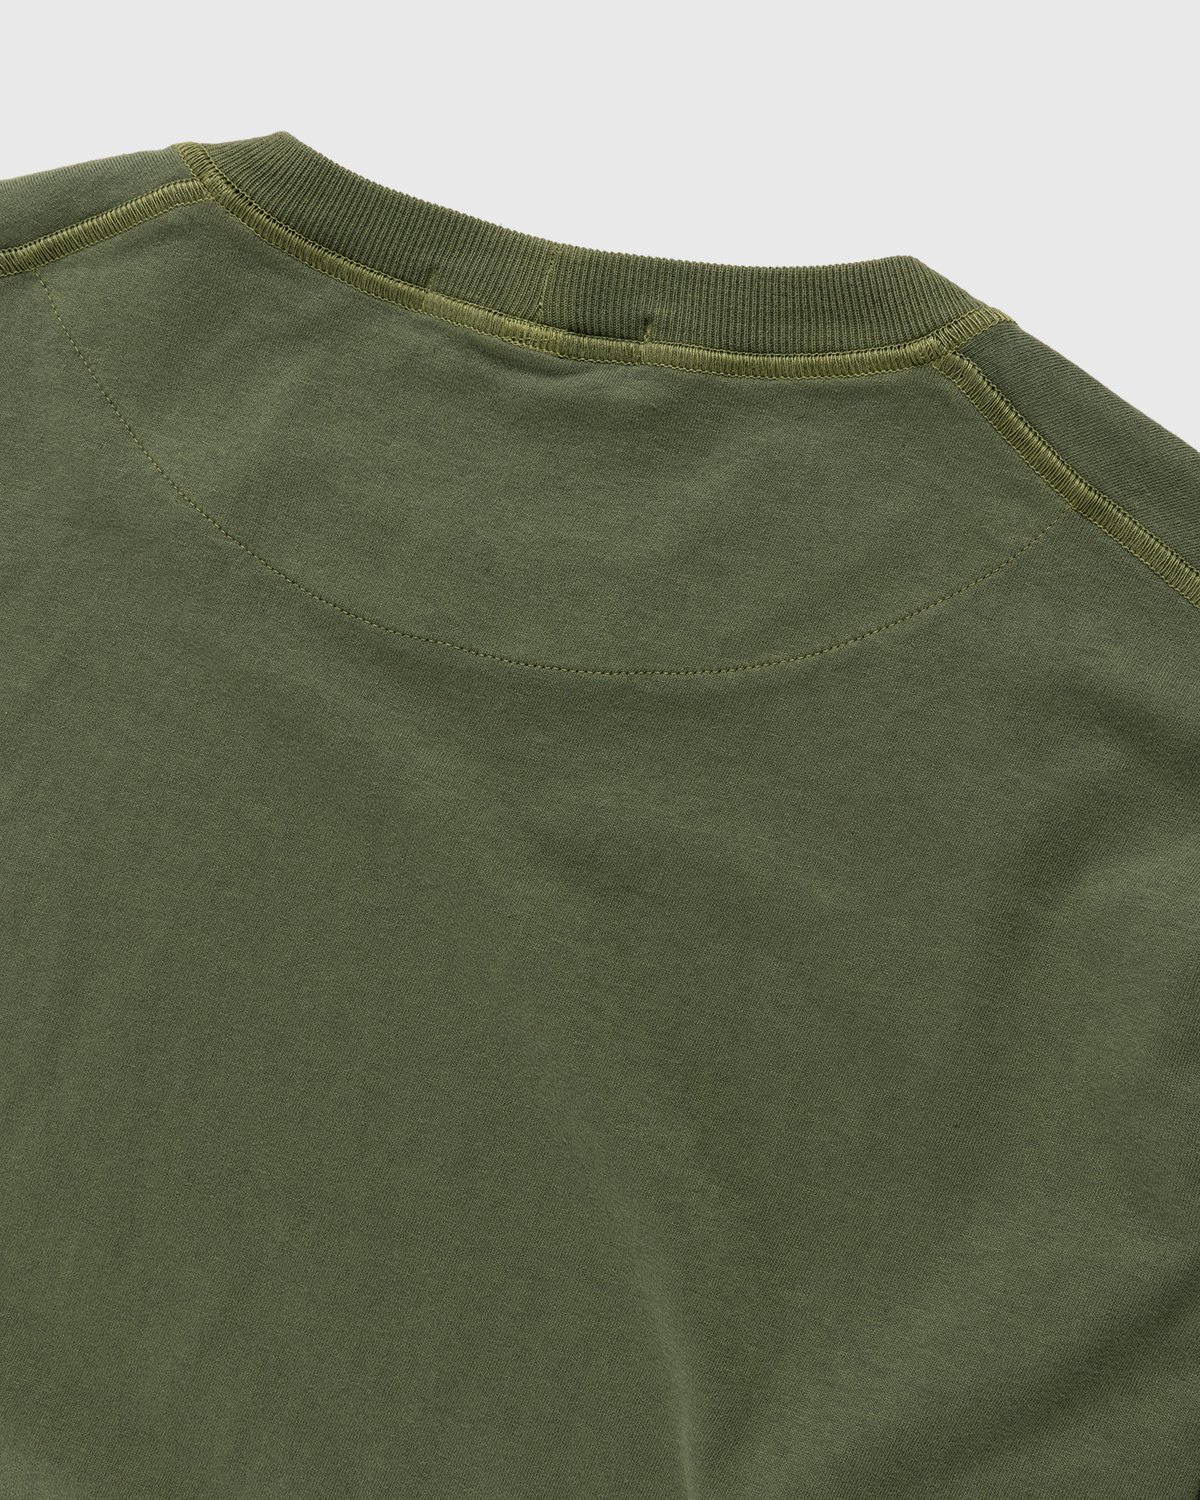 Stone Island - 21857 Garment-Dyed Fissato T-Shirt Olive Green - Clothing - Green - Image 3